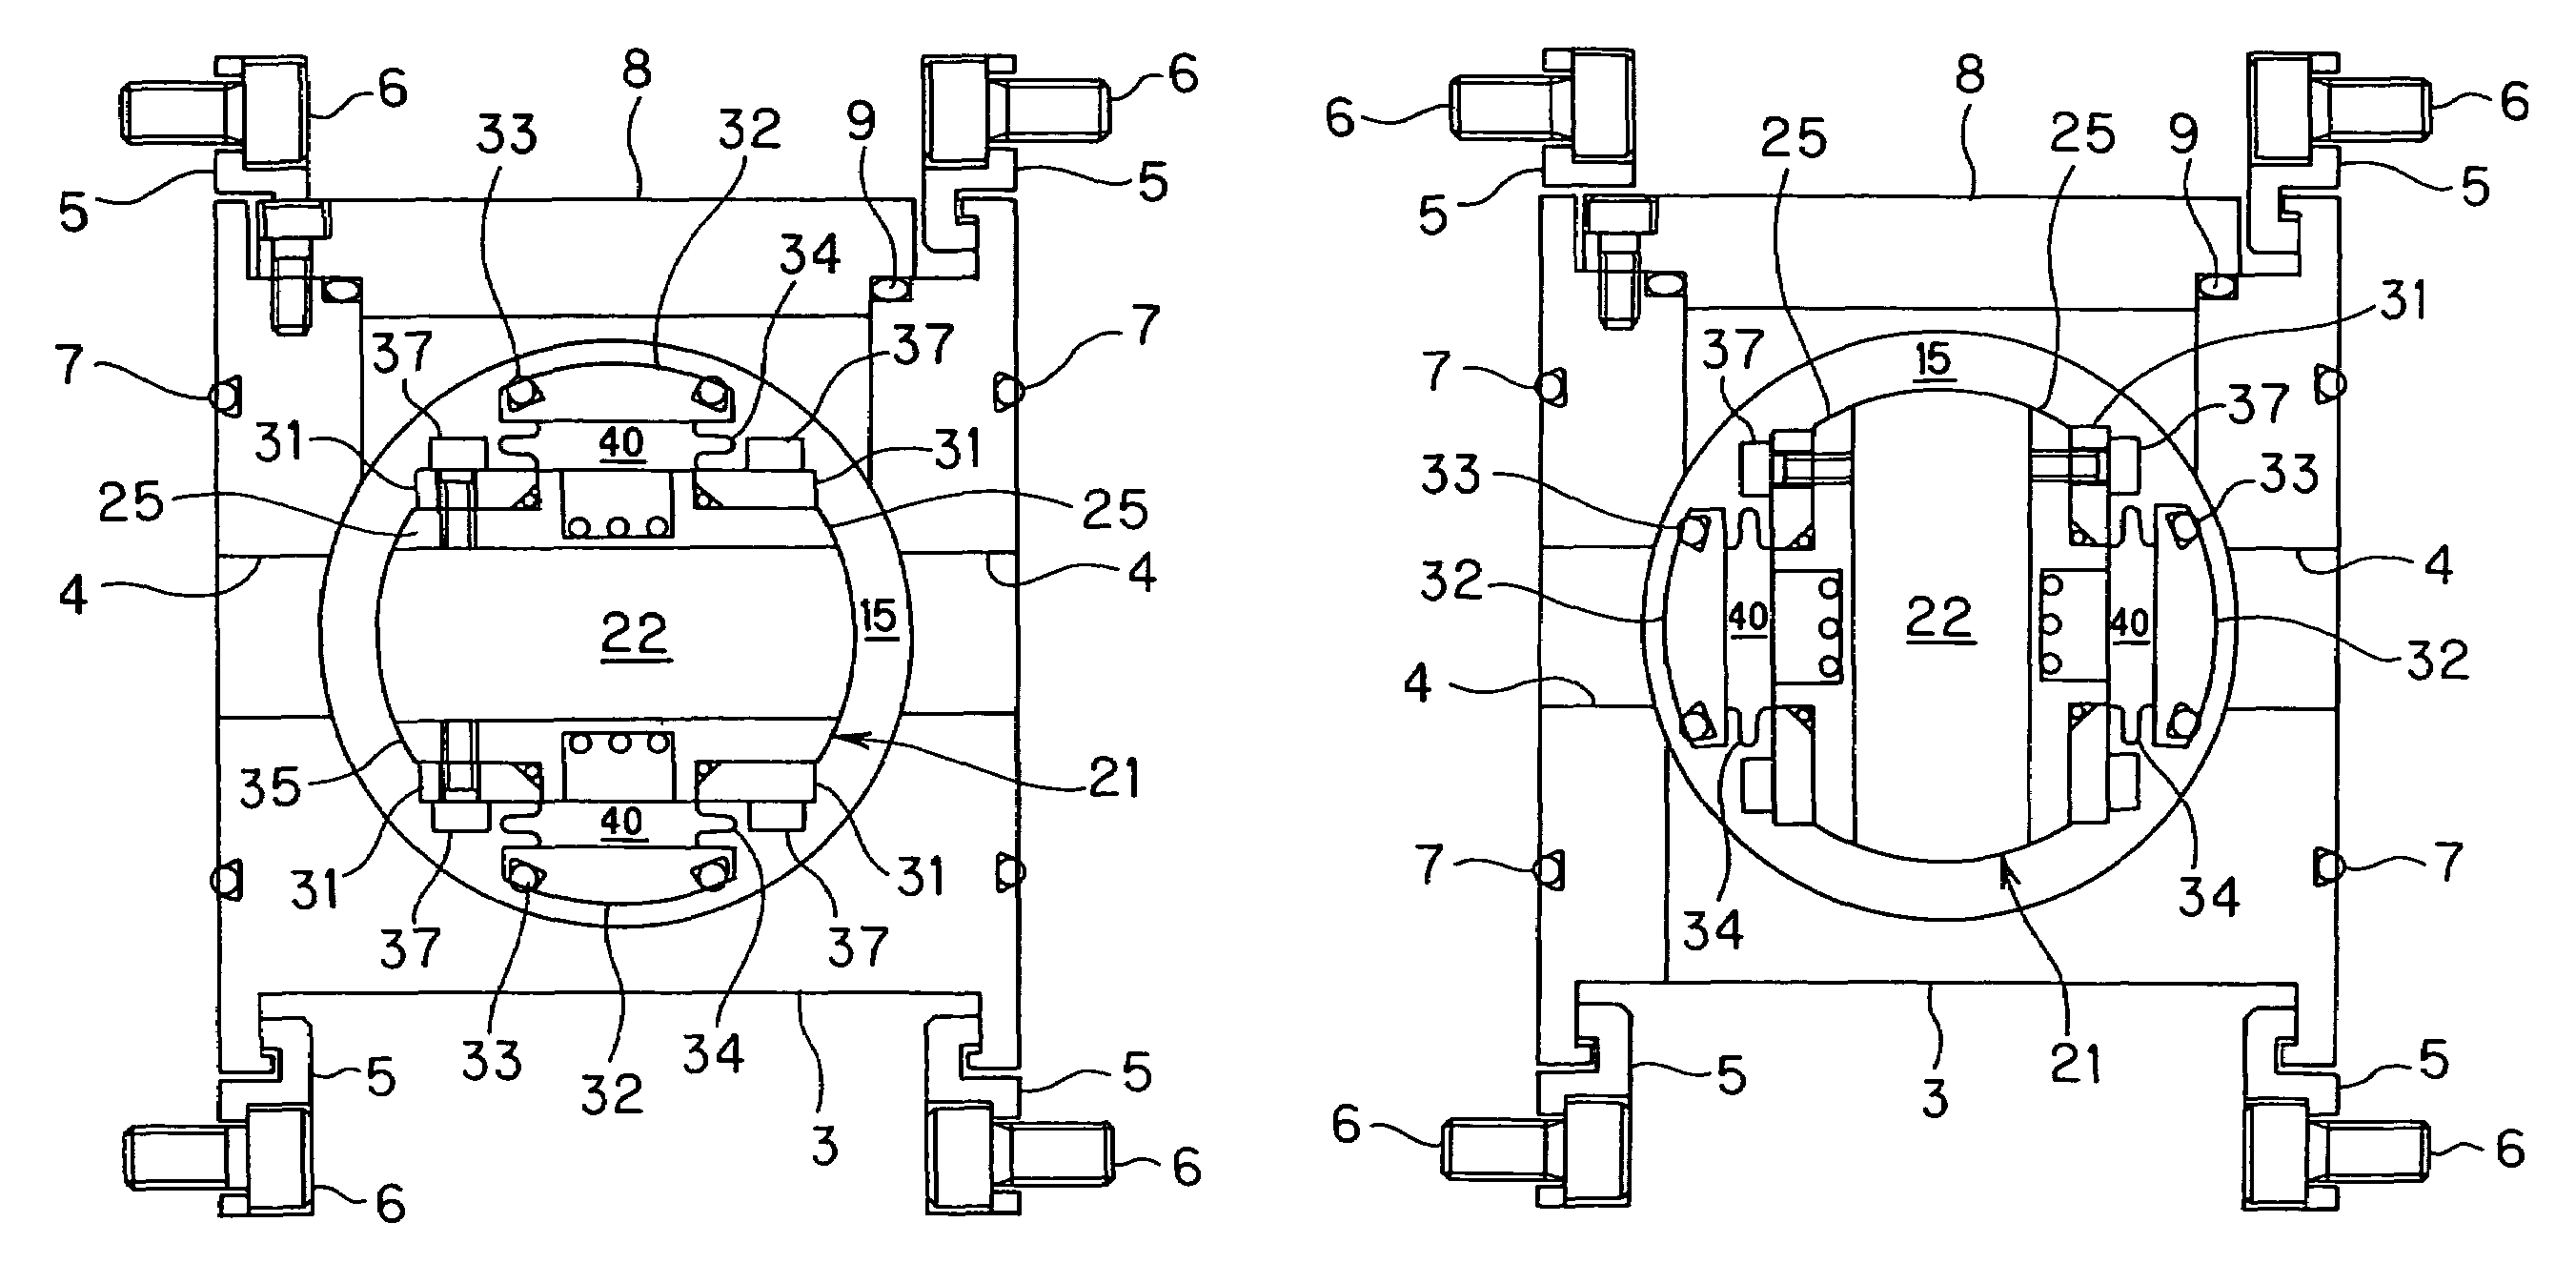 Shut-off valve and method of shutting off opening of vacuum chamber